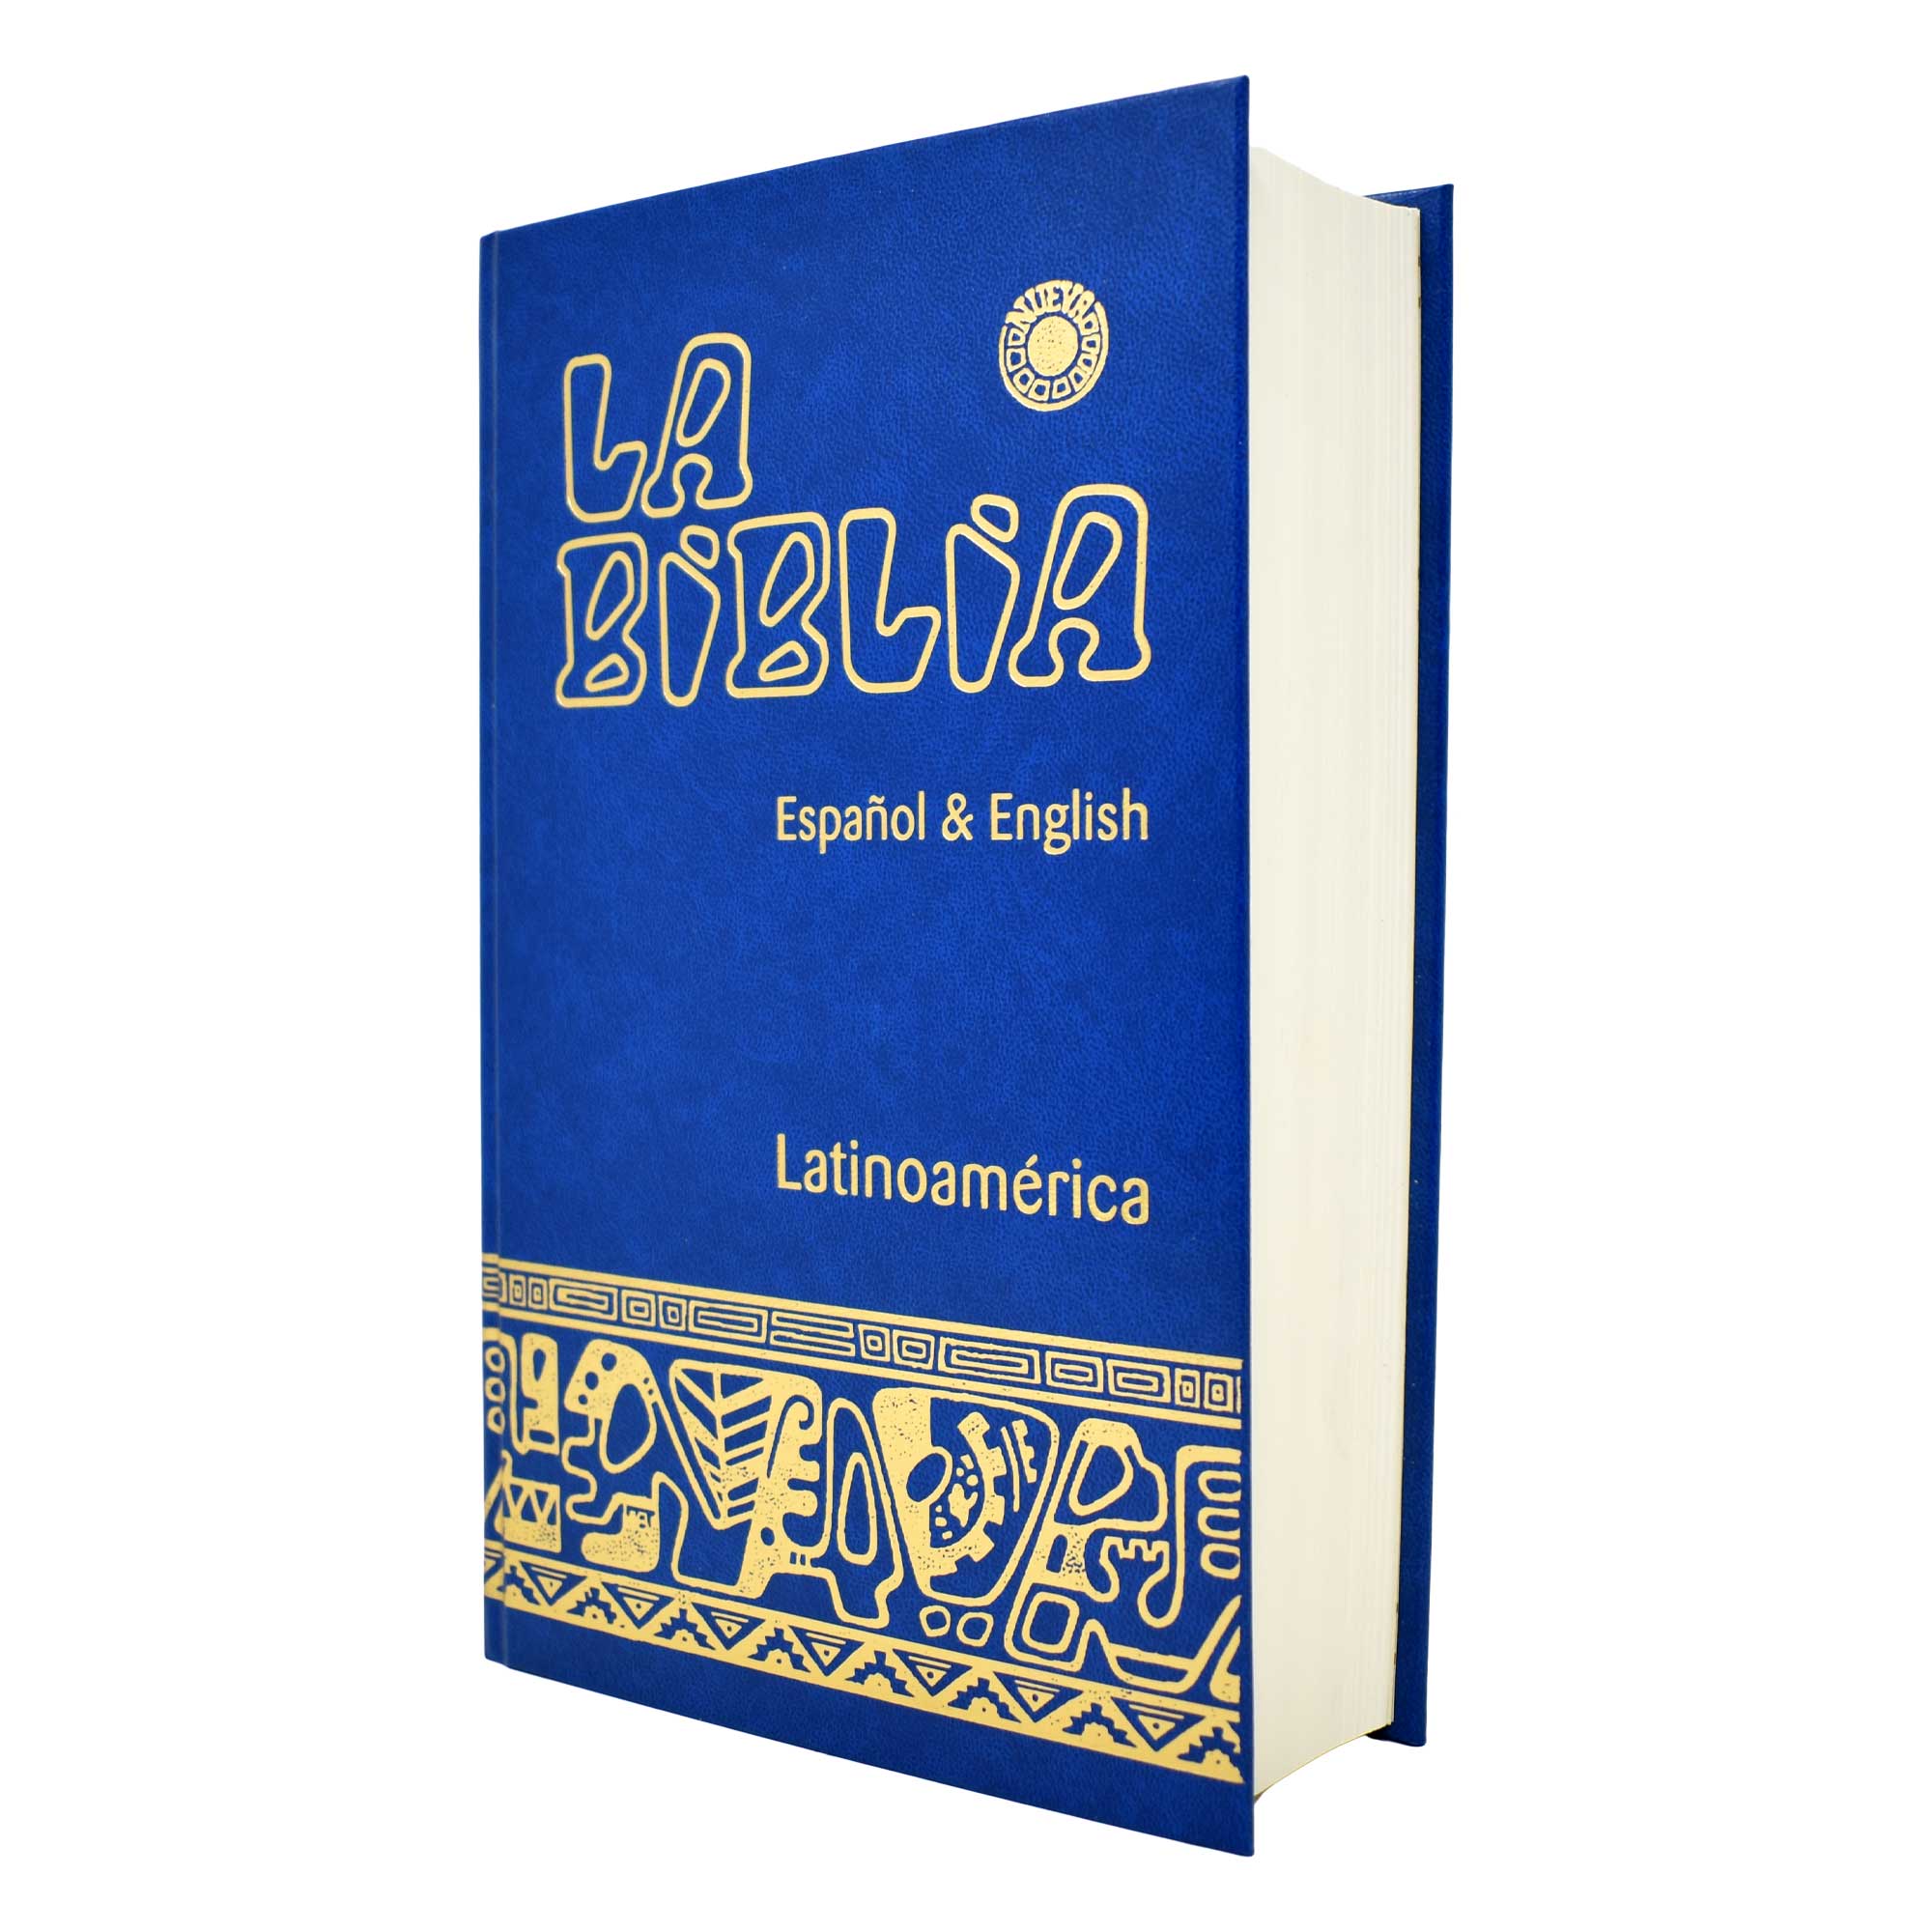 La Biblia Latinoamerica Bible